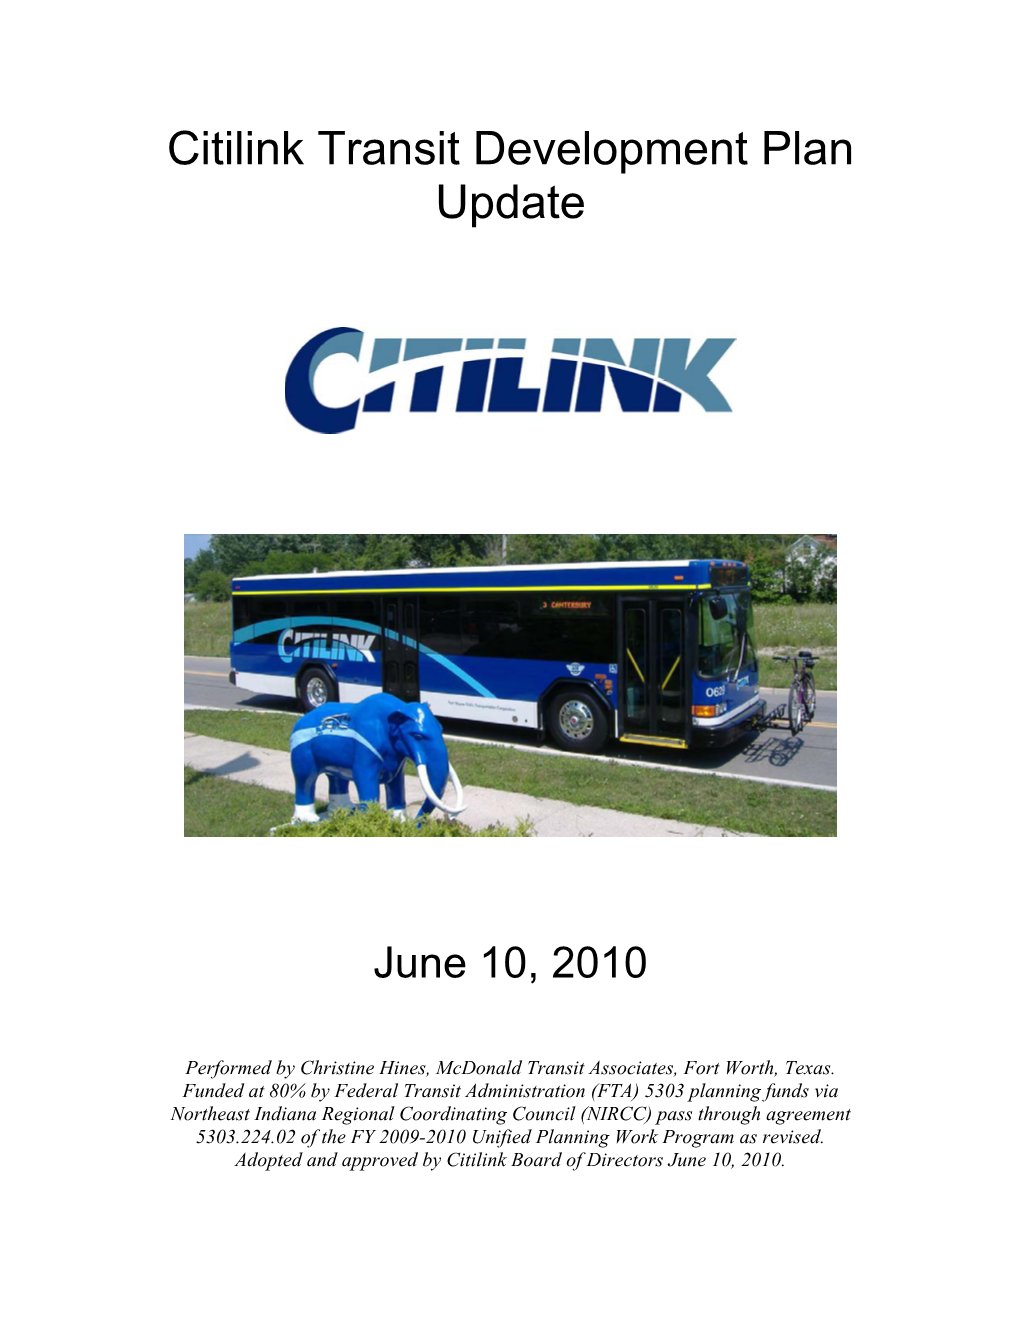 Citilink Transit Development Plan Update